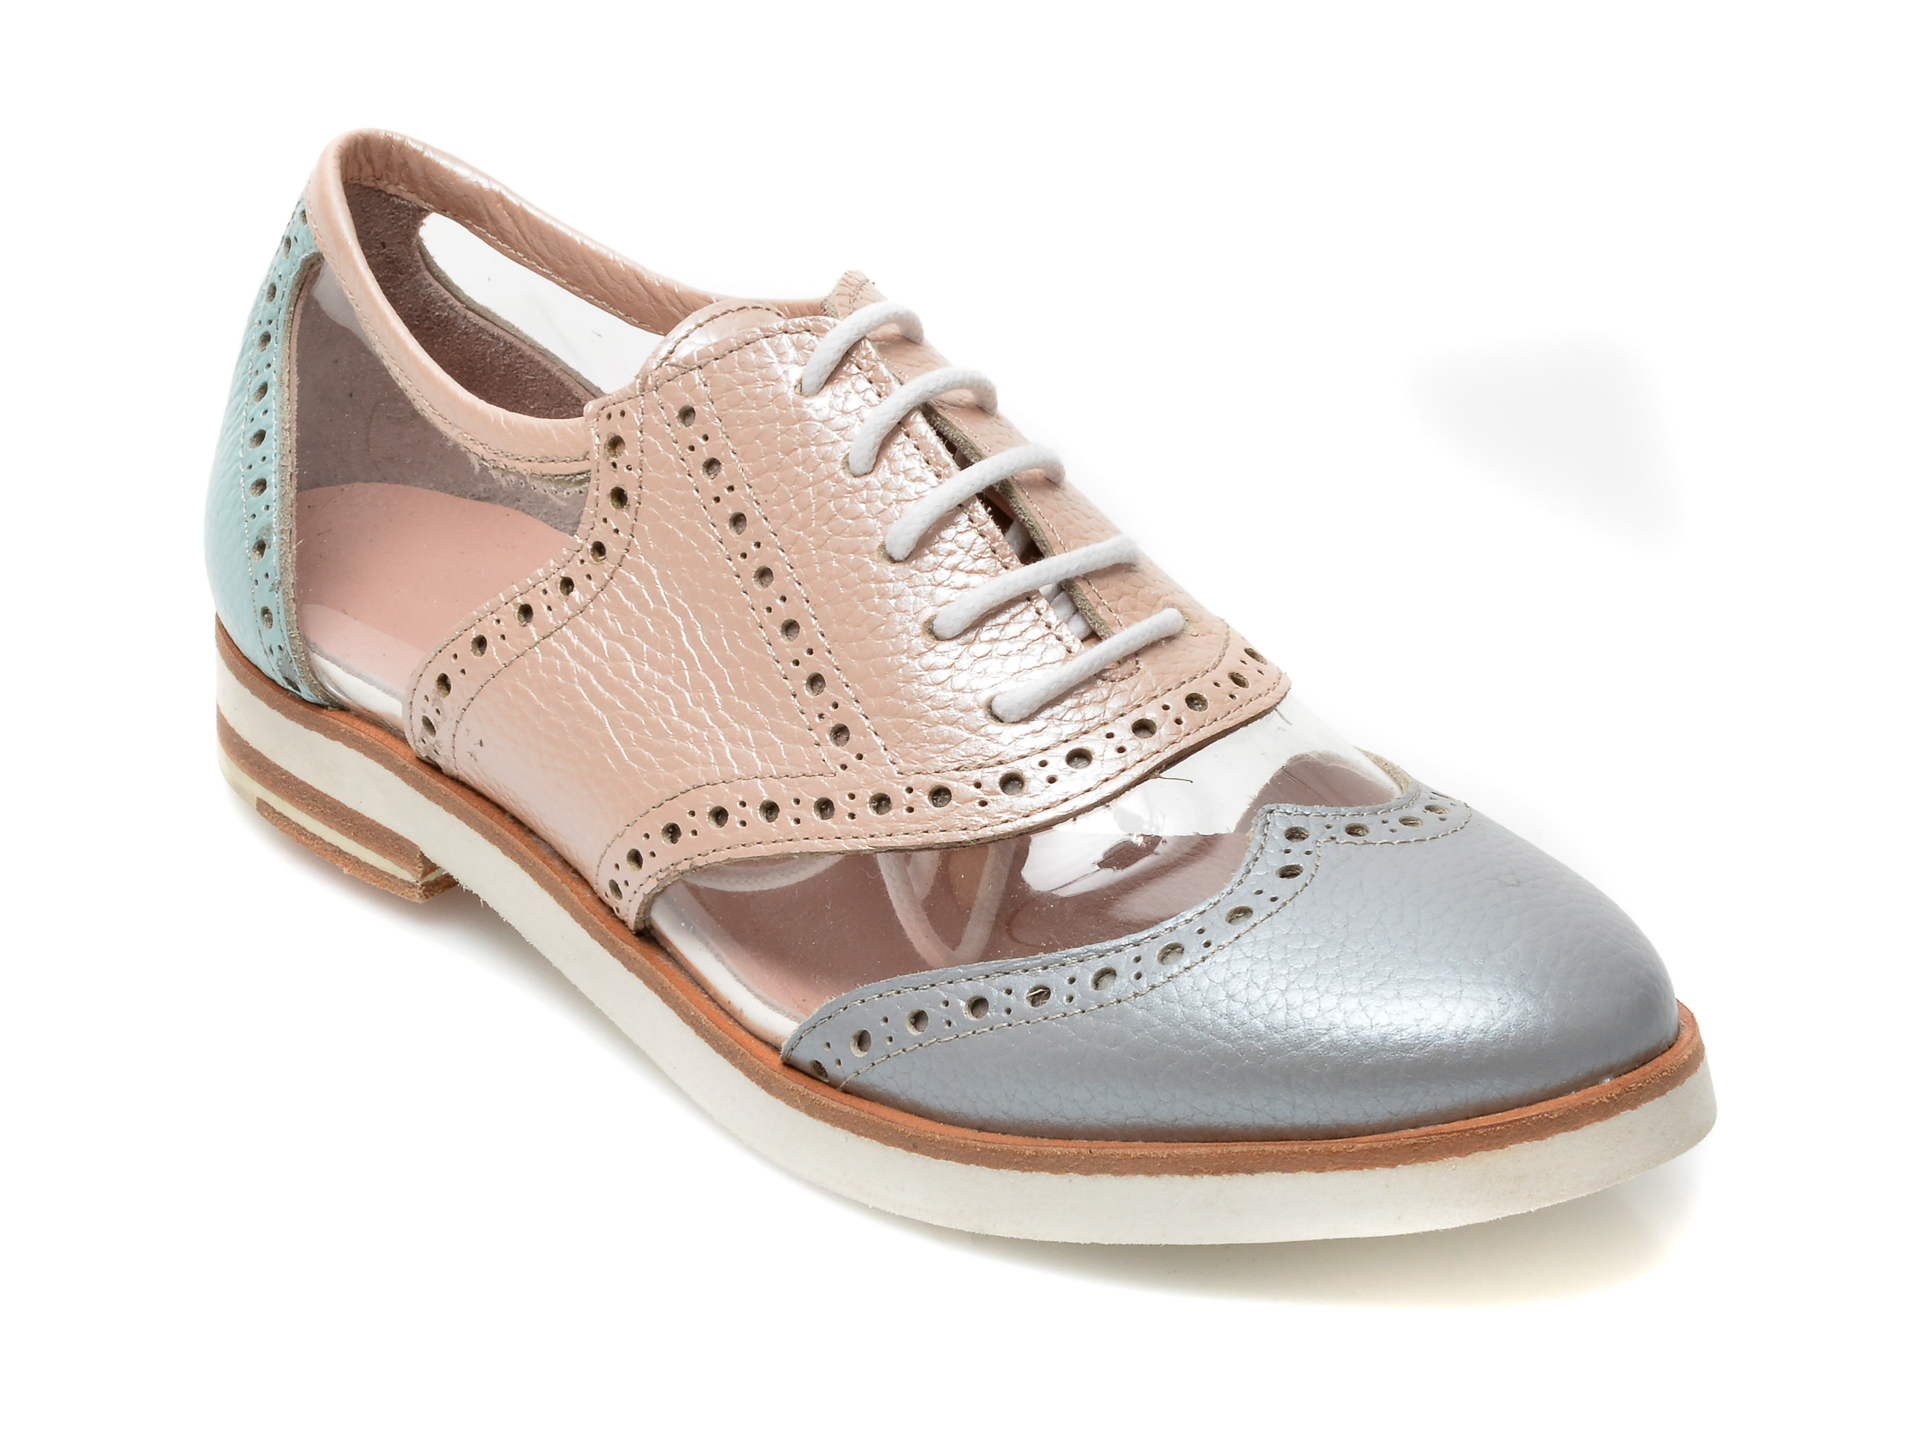 Pantofi LABOUR multicolori, 403, din piele naturala LABOUR